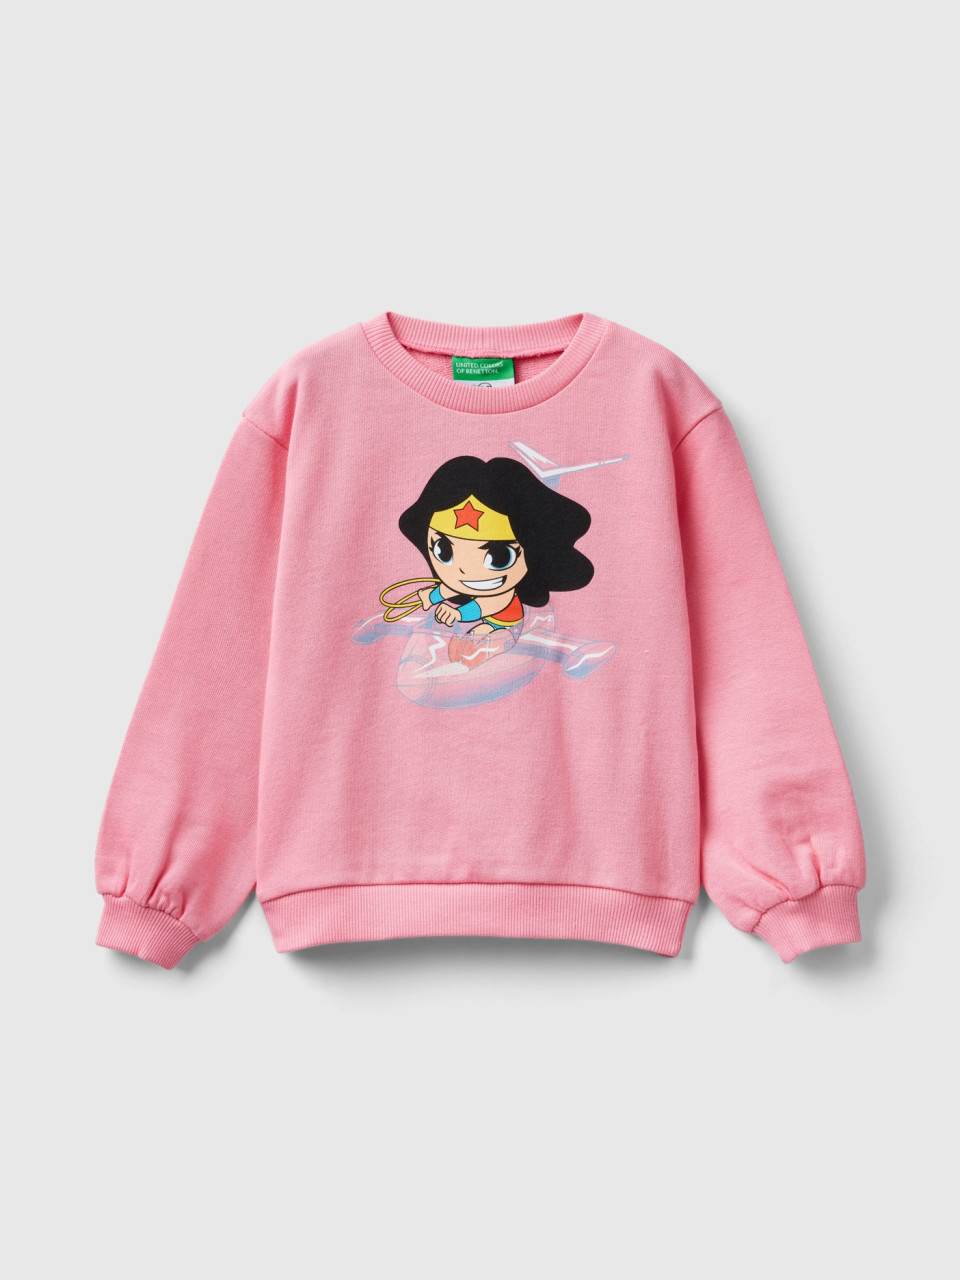 Benetton, Wonder Woman ©&™ Dc Comics Sweatshirt, Pink, Kids